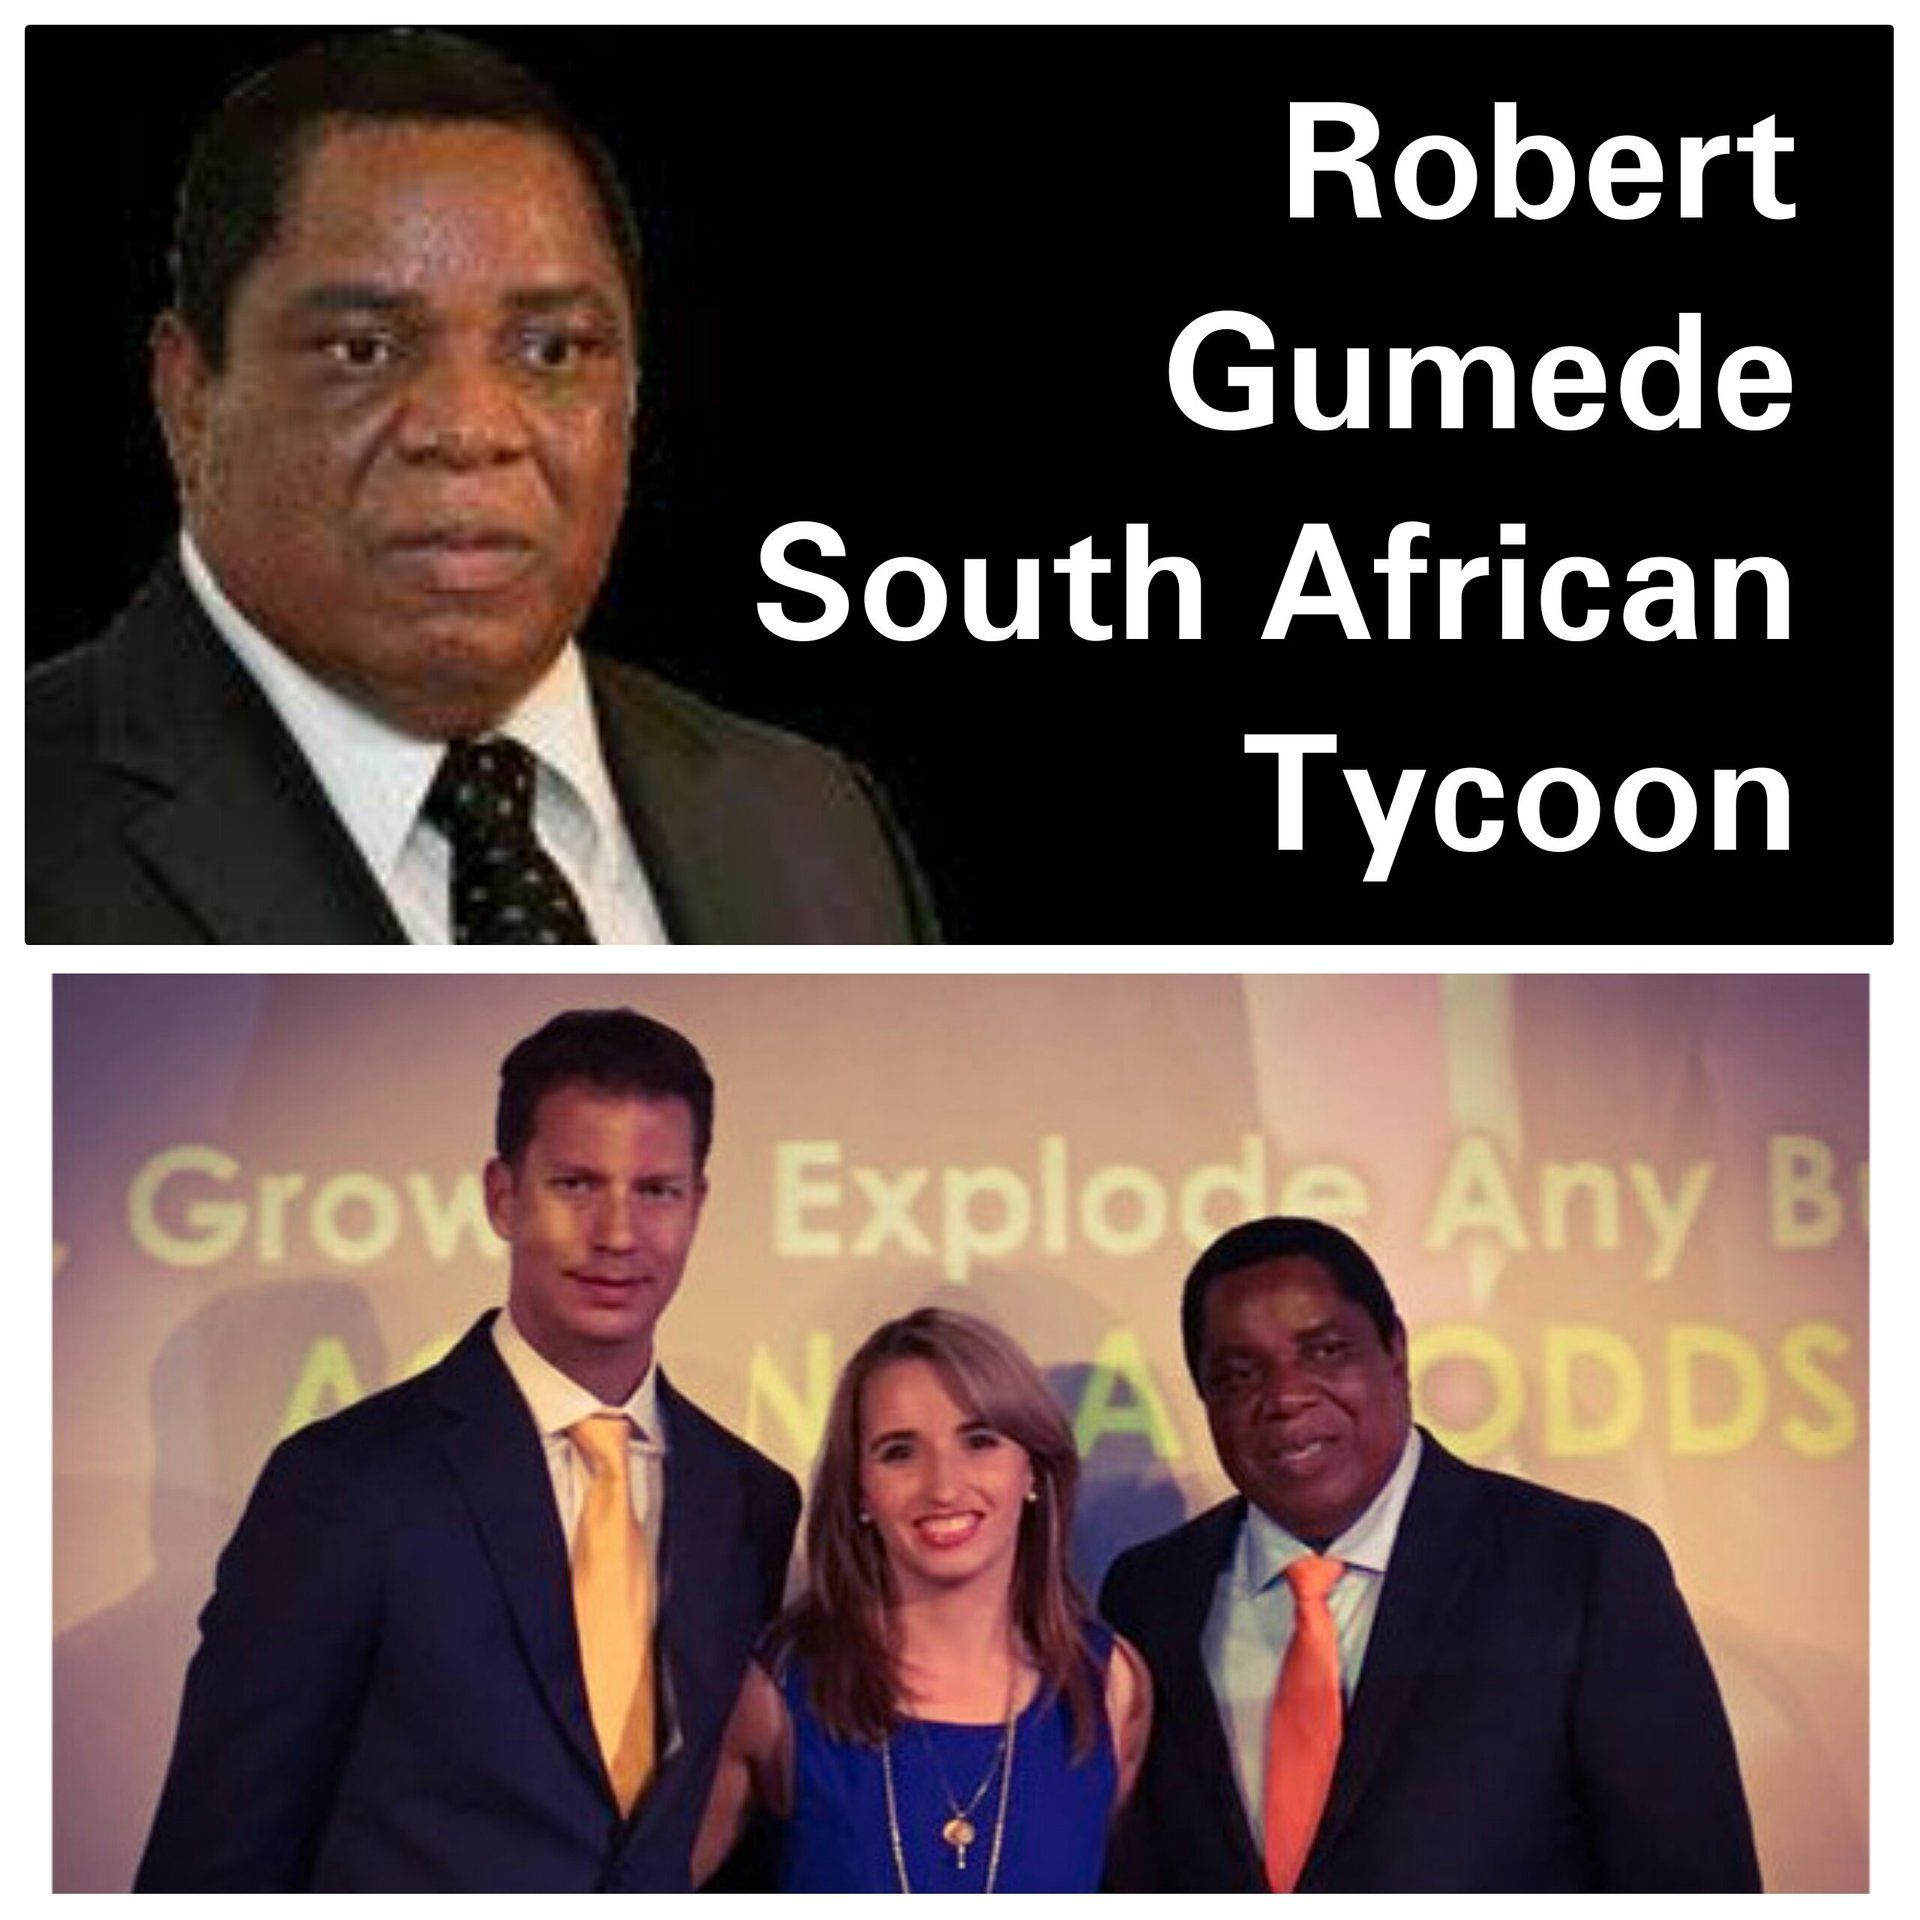 Robert Gumede - South African Billionaire with top South African Entrepreneur Marisa da Silva